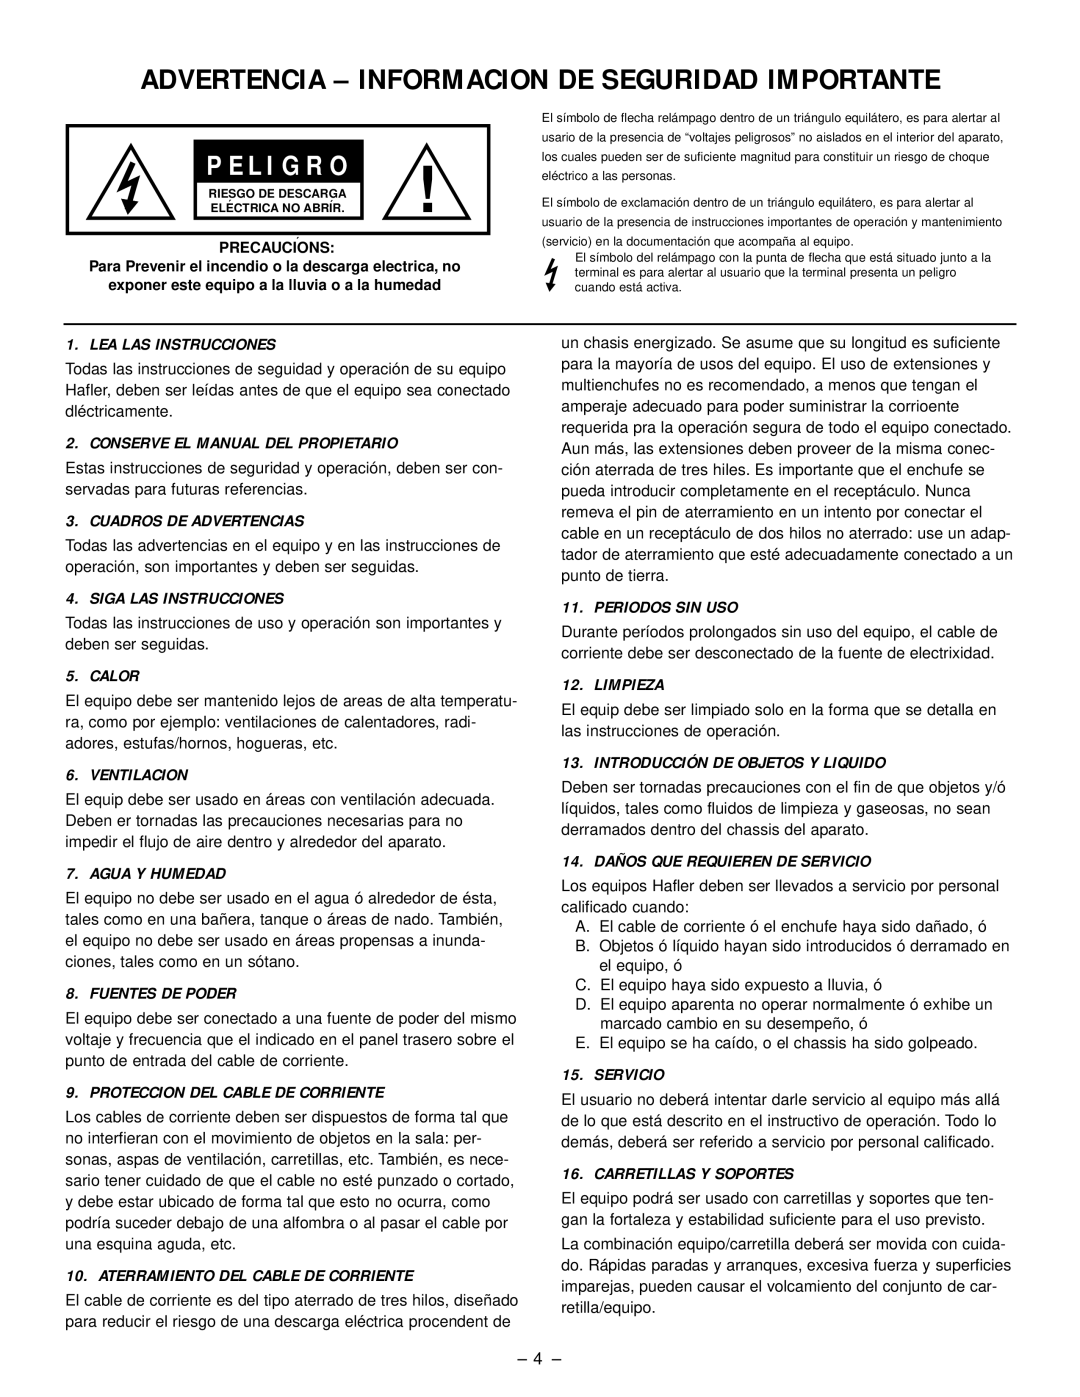 Hafler SR2300, SR2600 owner manual P E L I G R O, Advertencia - Informacion De Seguridad Importante 